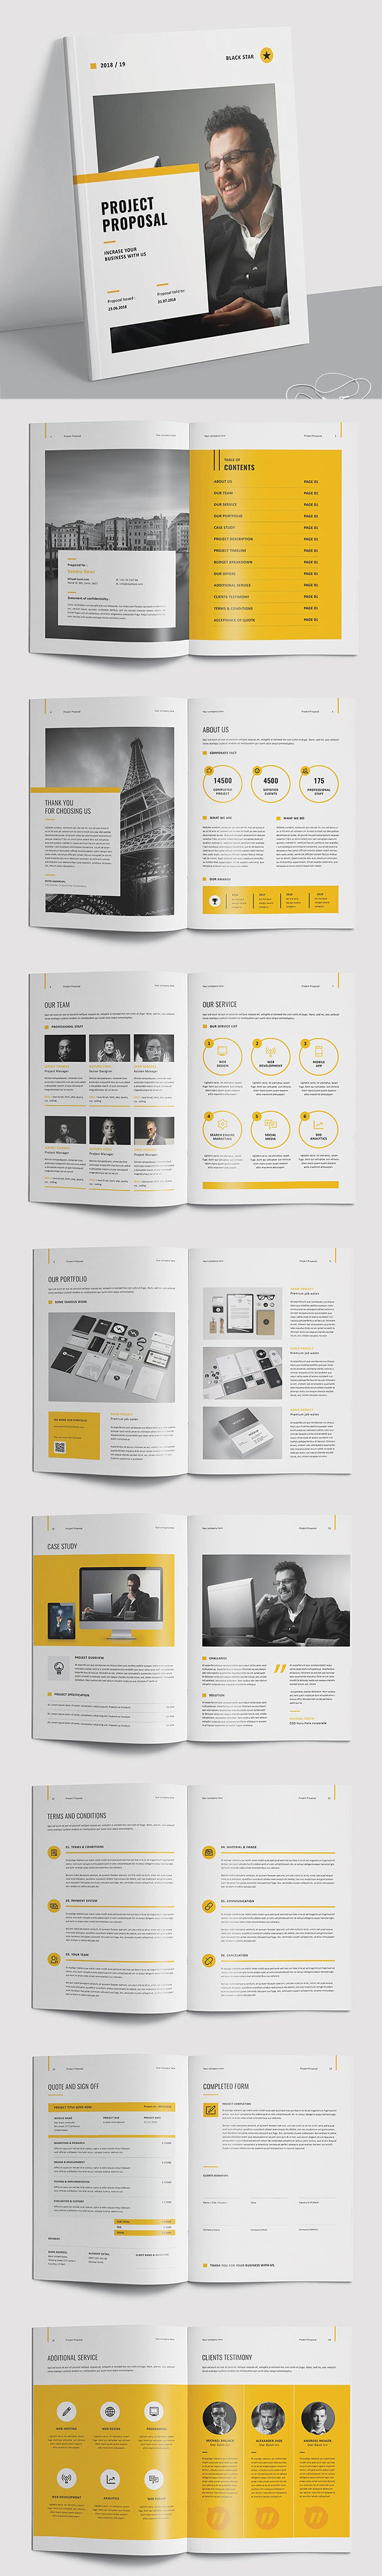 100 Professional Corporate Brochure Templates - 80